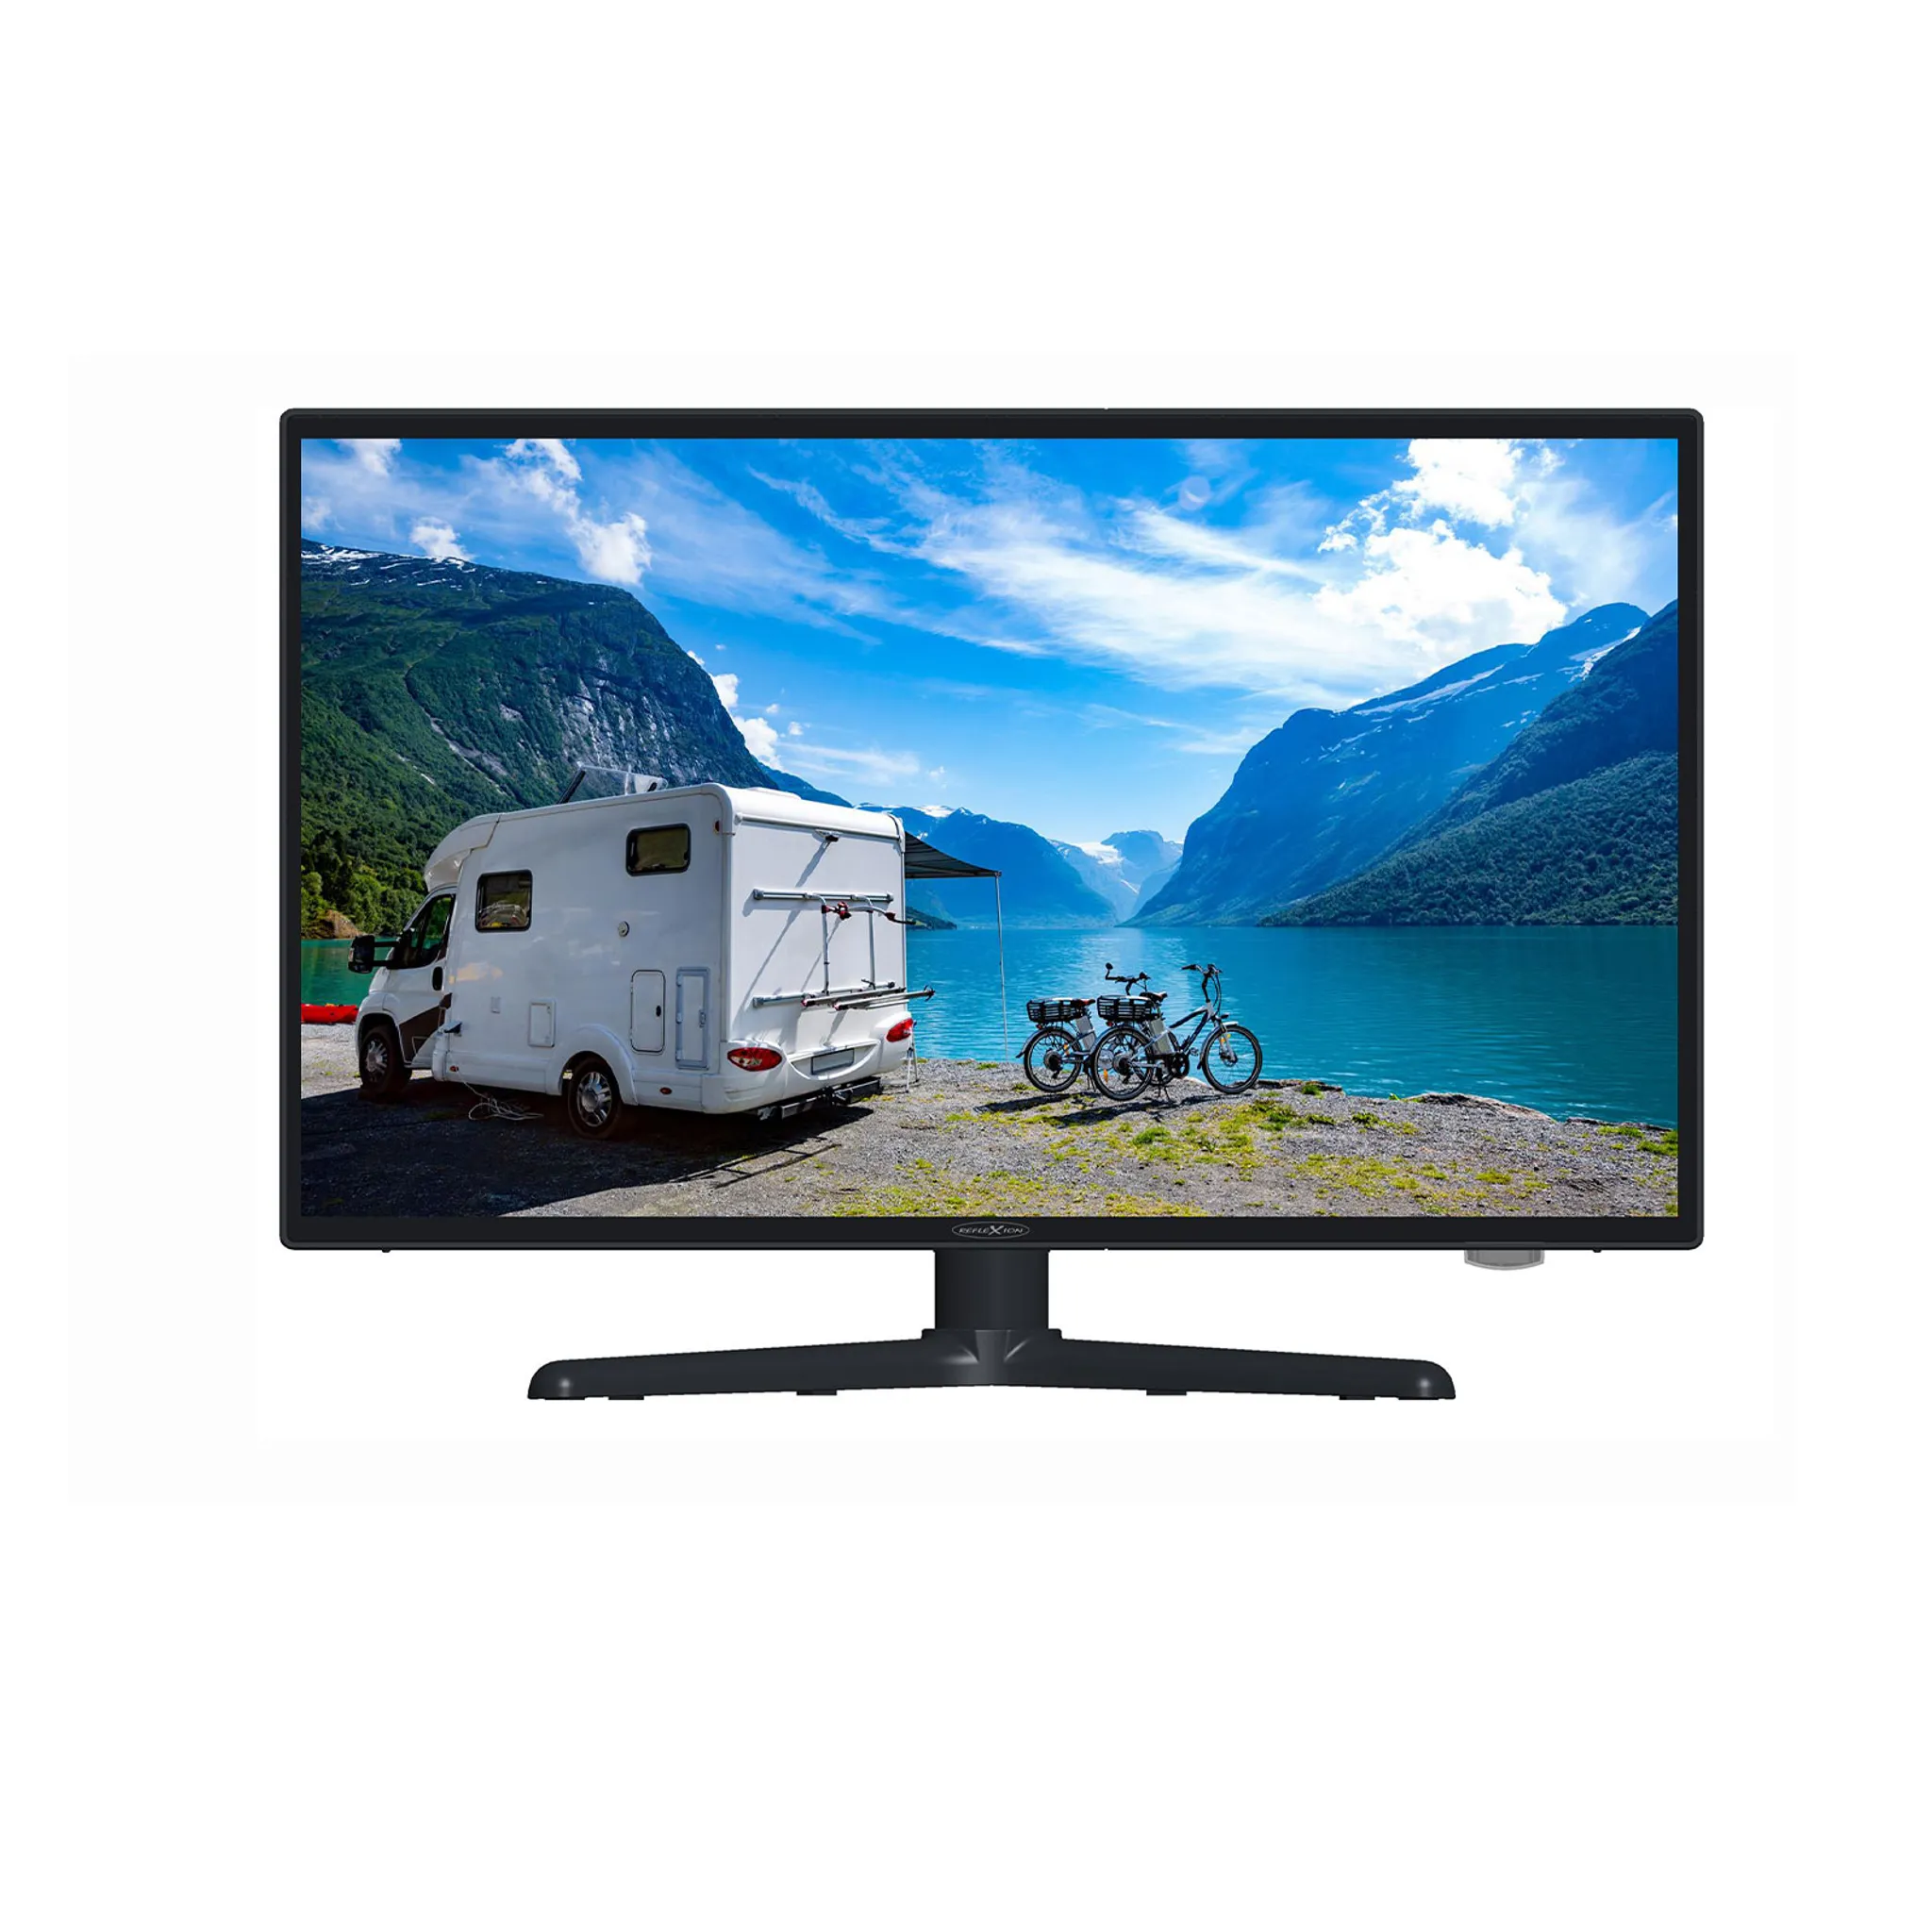 Hitachi 22HE4002 AndroidTV Smart Wifi 22 Zoll 56cm Full HD LED TV 